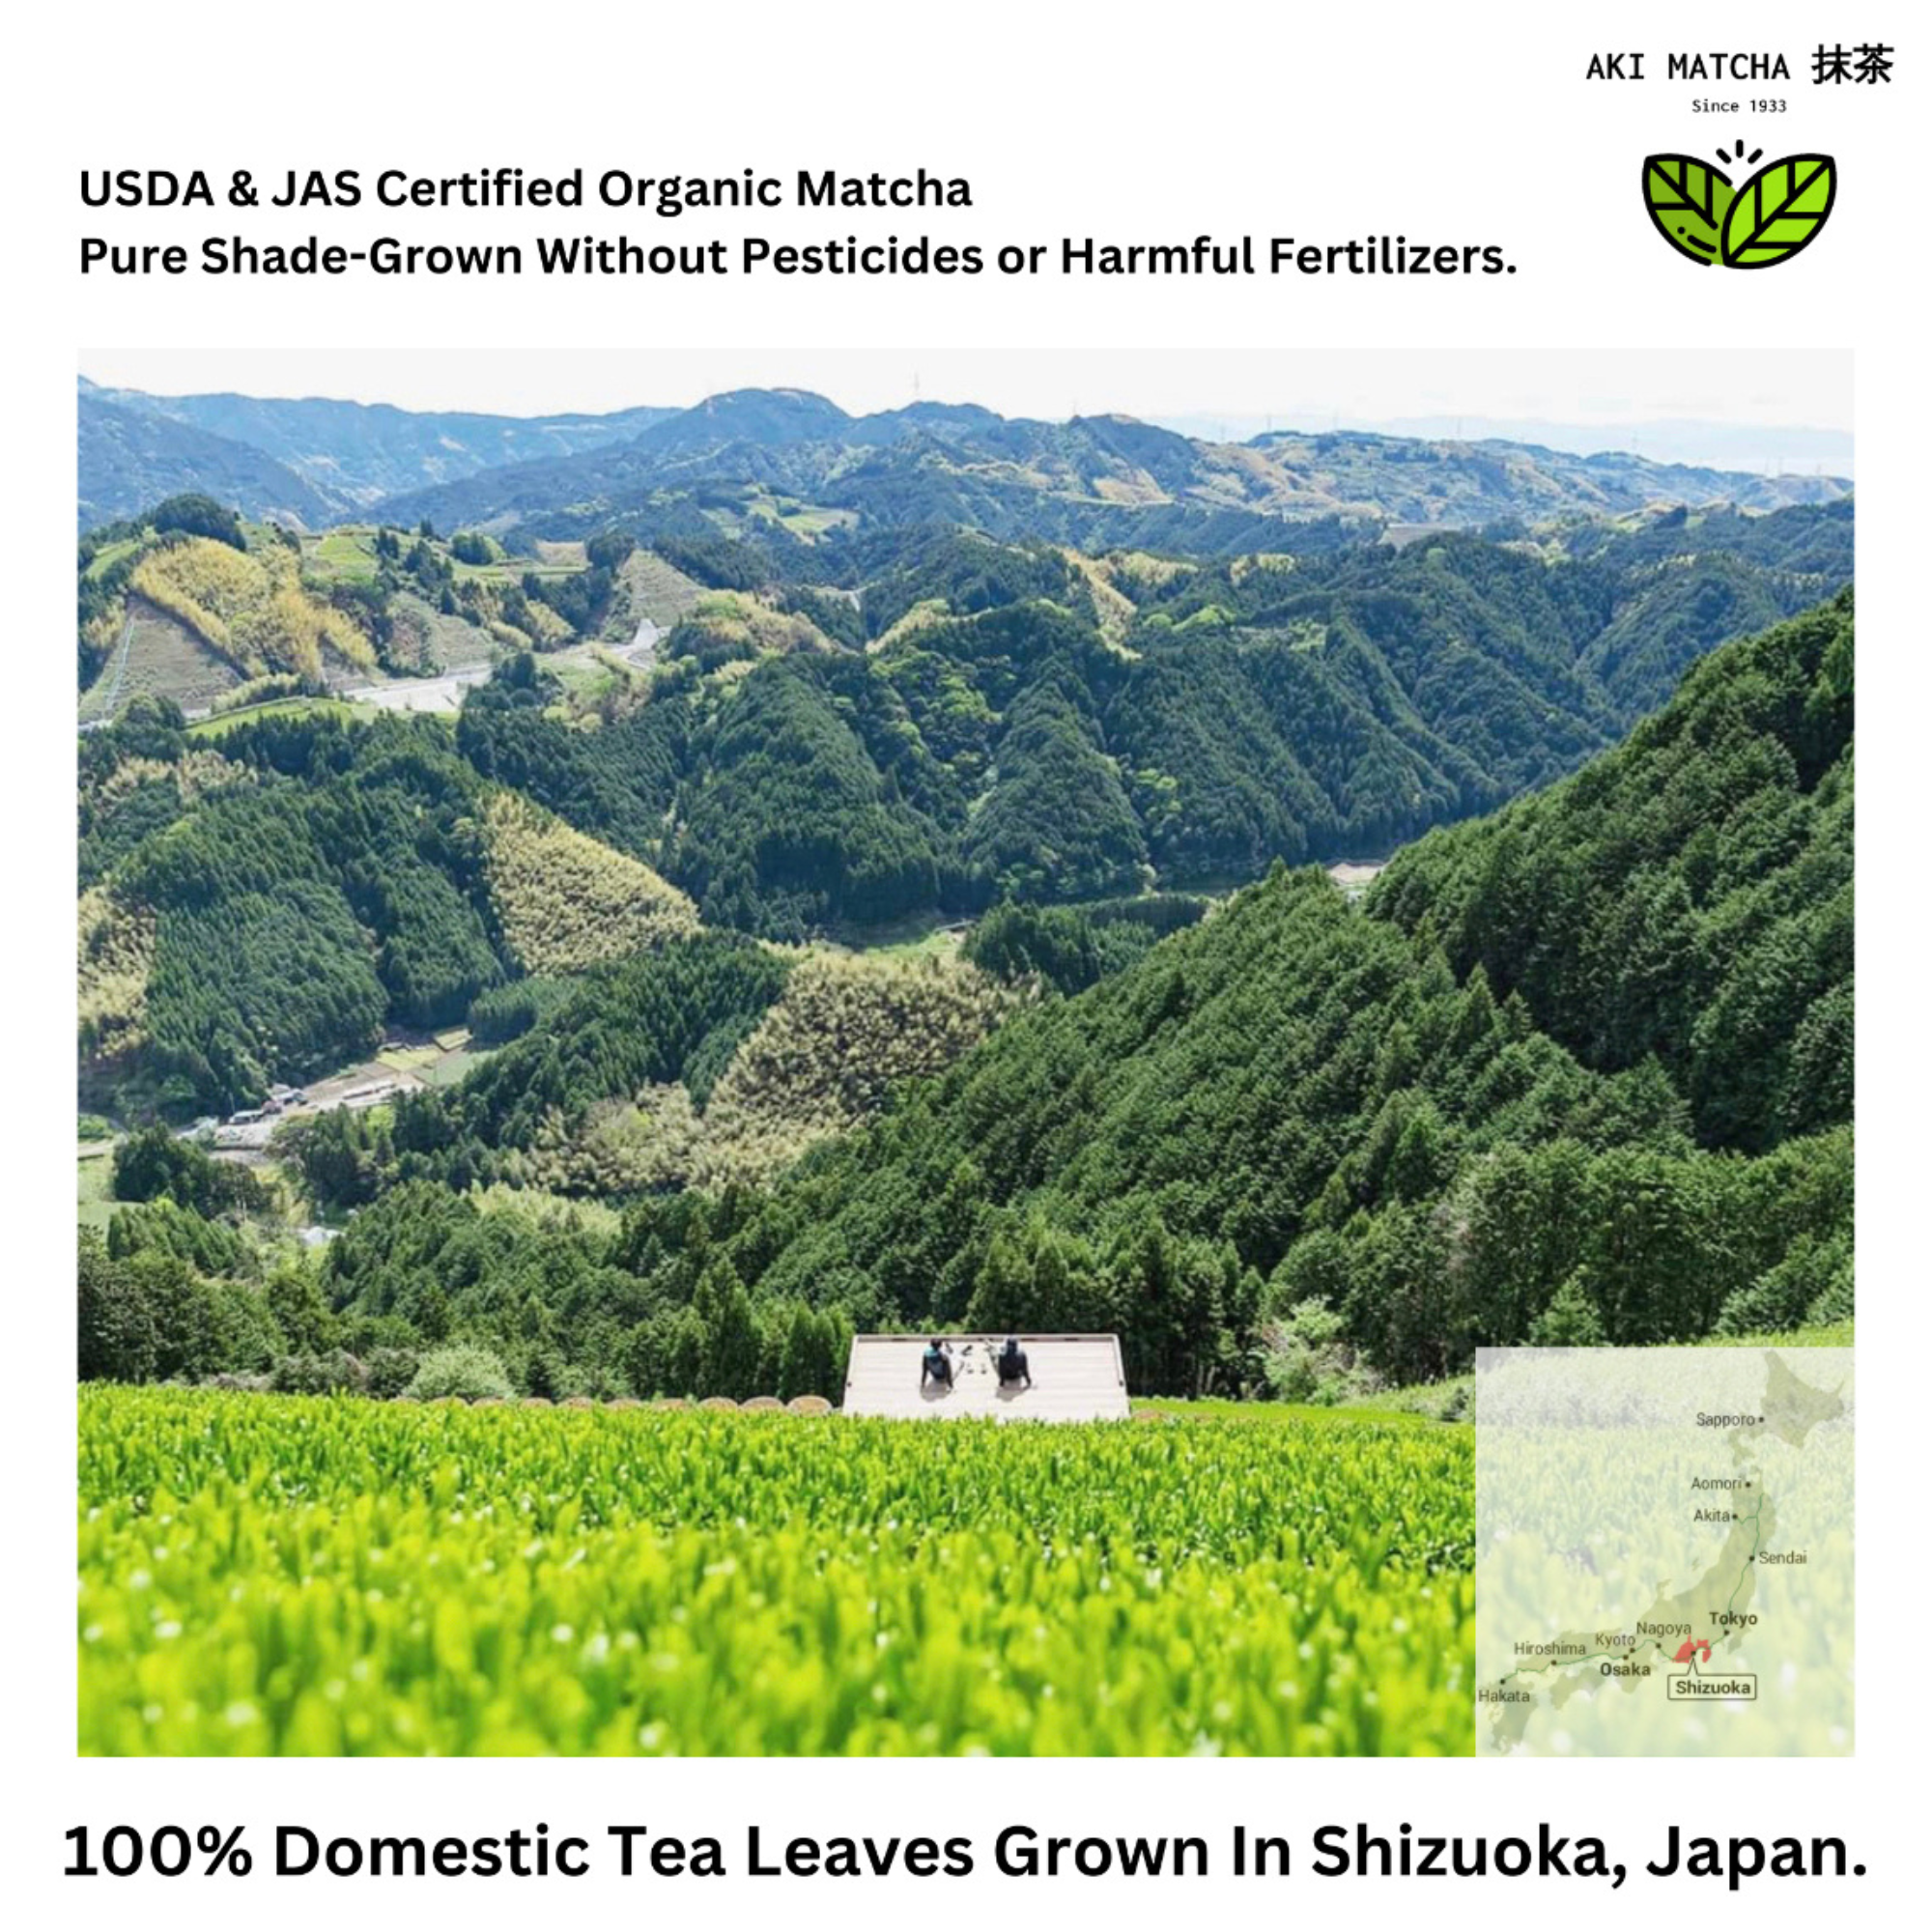 AKI MATCHA - Organic Matcha Green Tea Powder | Made in Japan | USDA Certified Organic | Spring Harvest Ceremonial Grade 50g (25 servings)